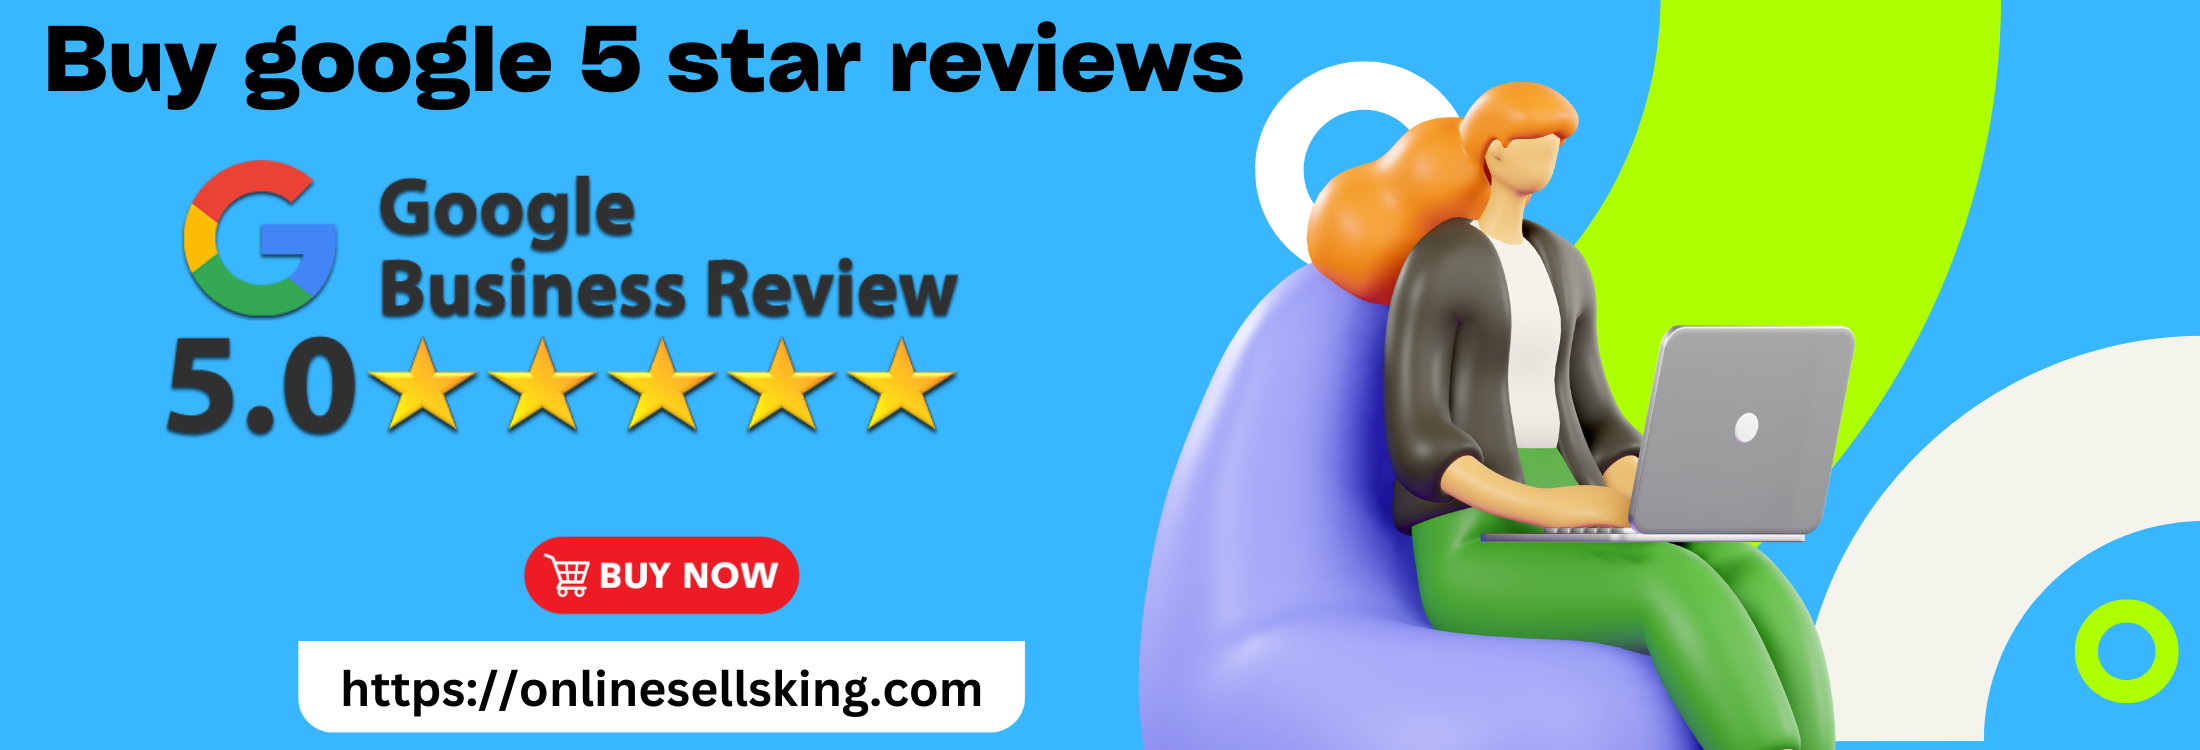 Buy Google 5 star reviews